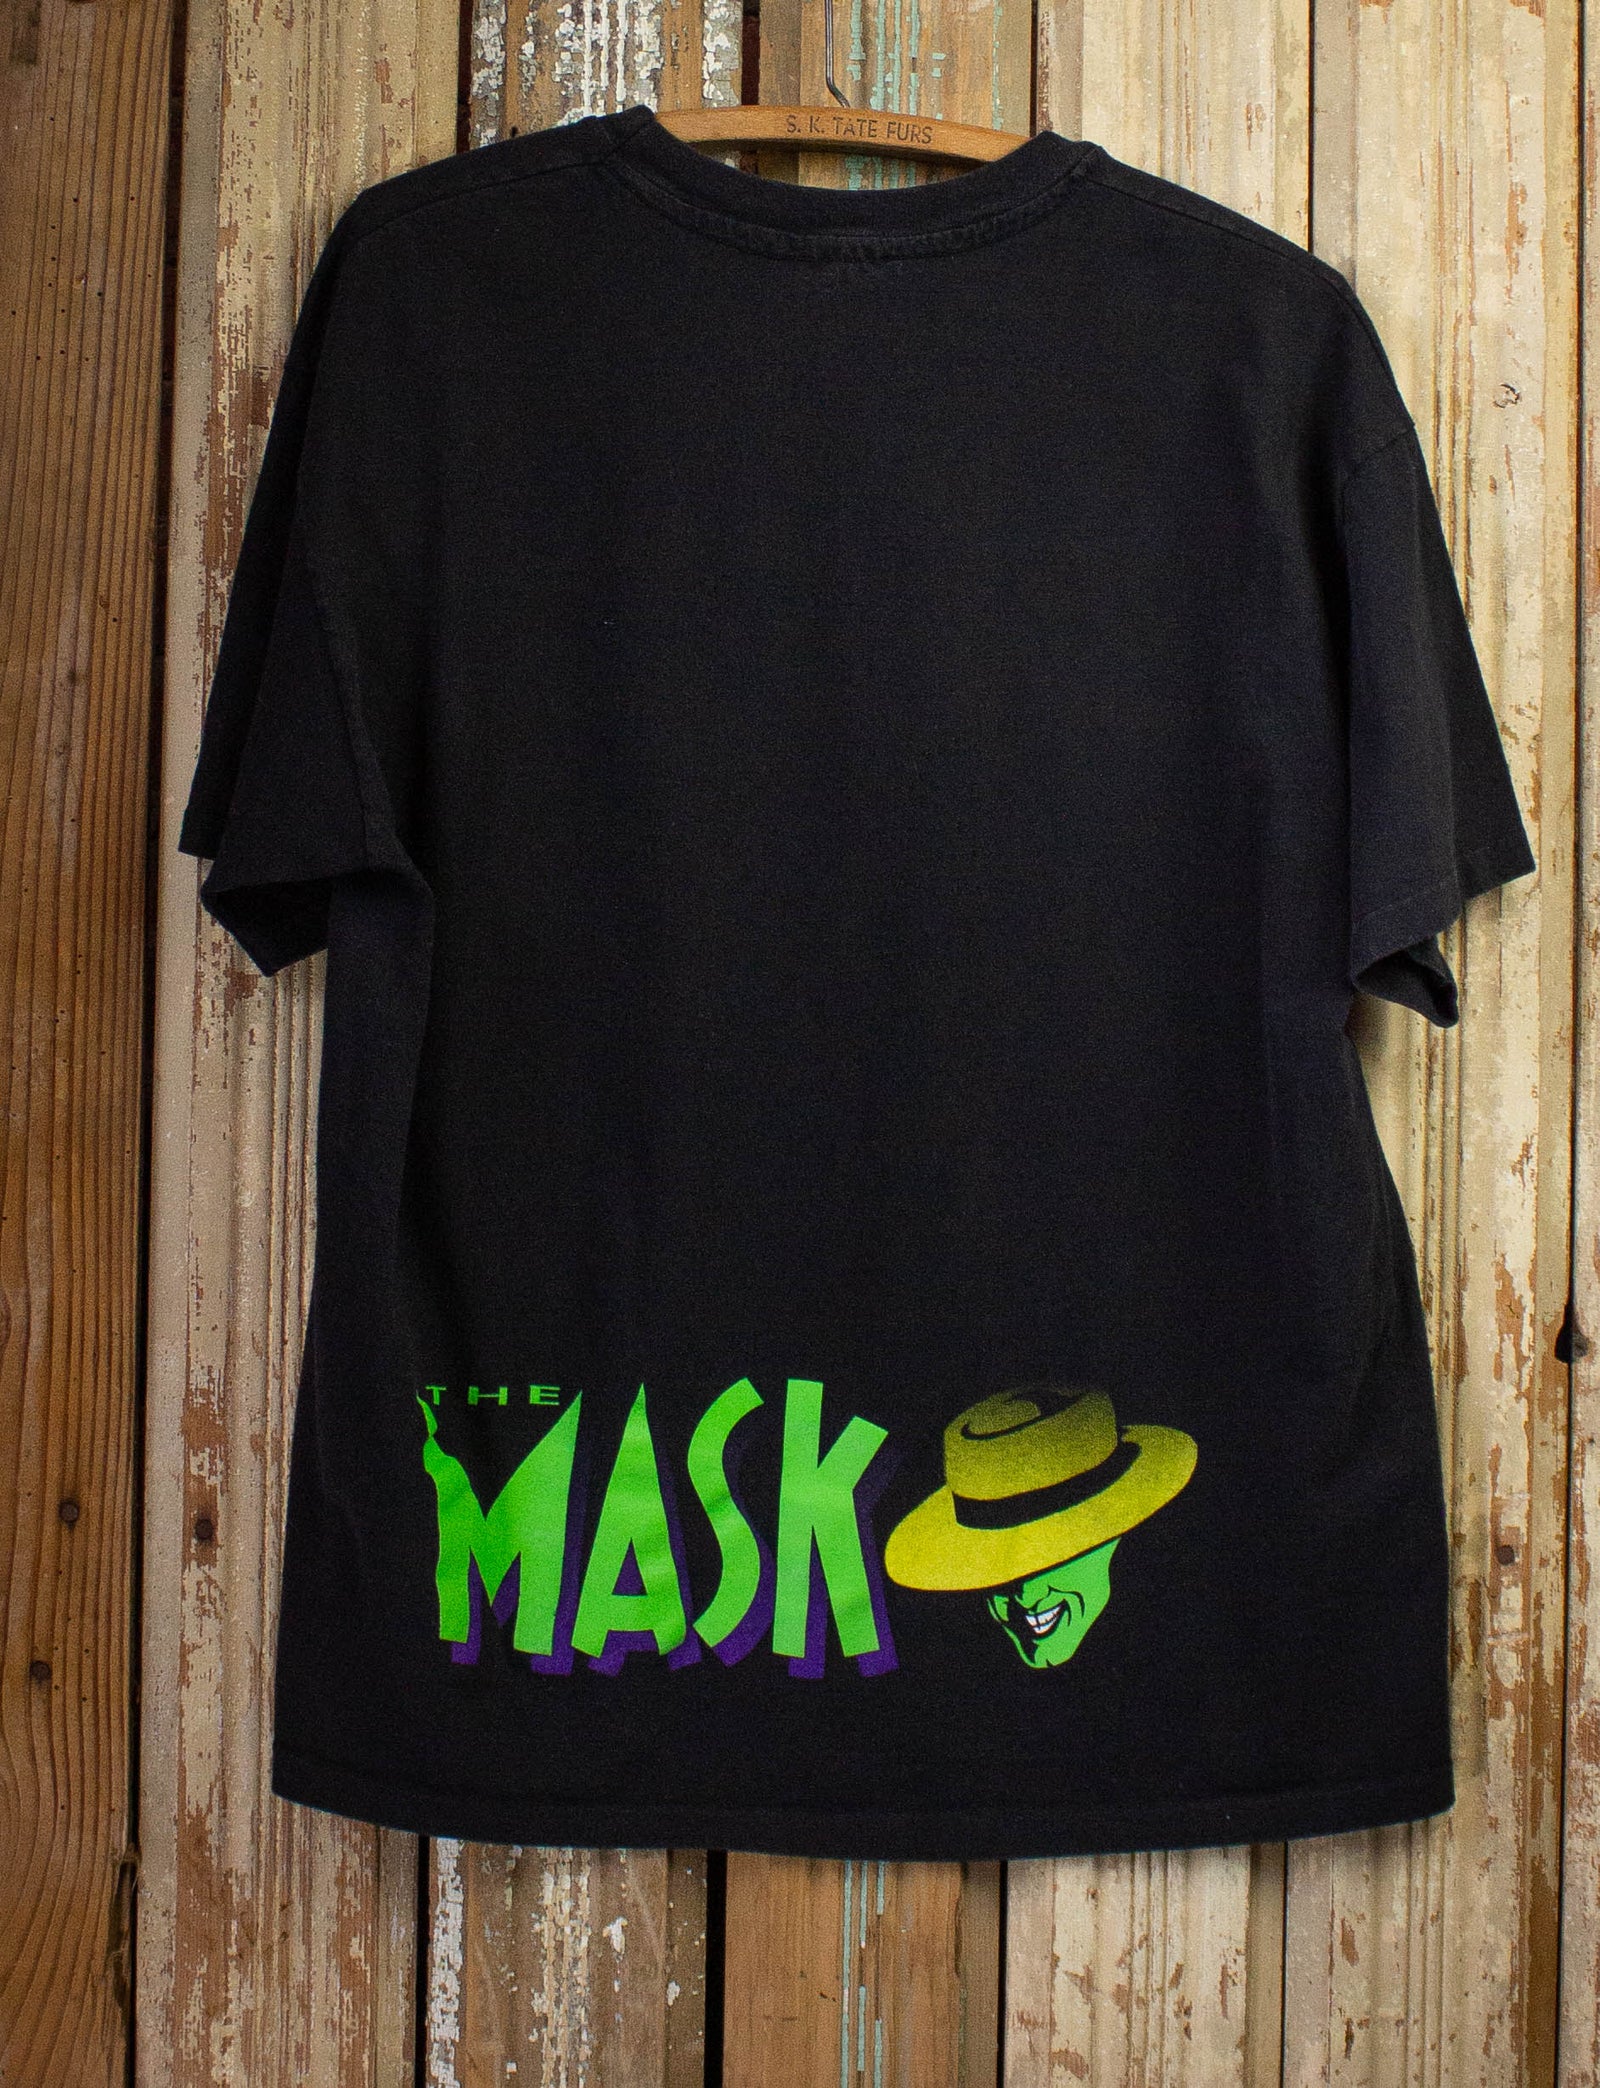 Vintage The Mask Zero To Hero Graphic T-Shirt 1994 XL